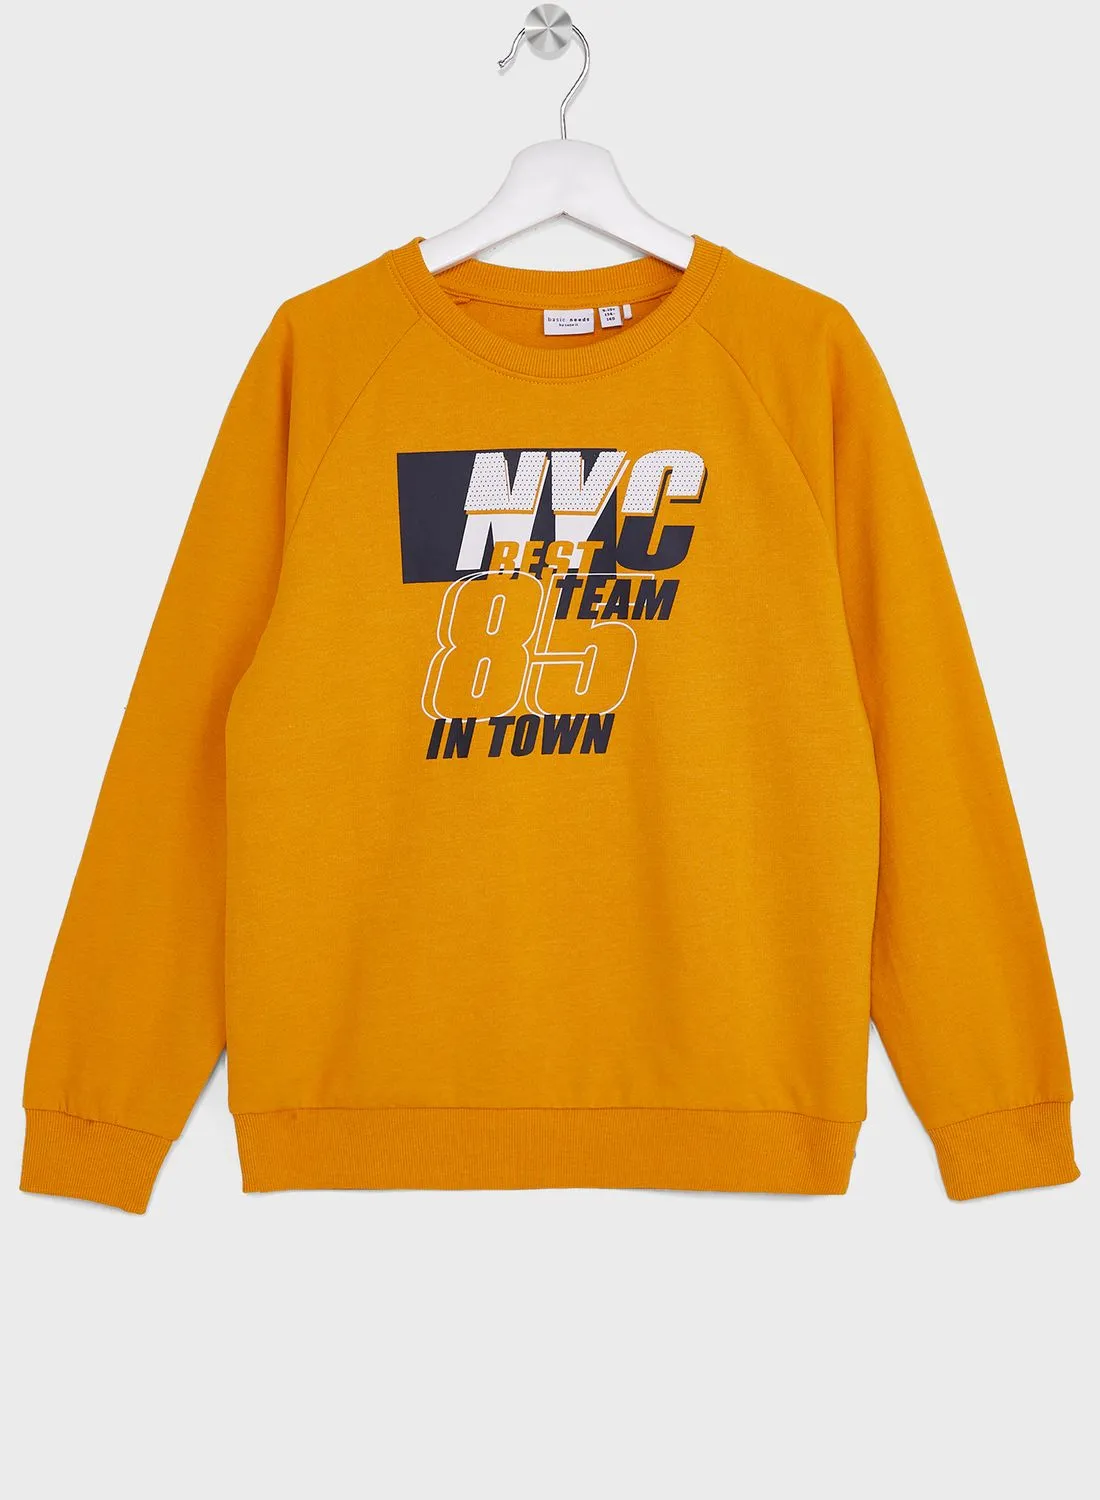 NAME IT Kids New York Sweatshirt